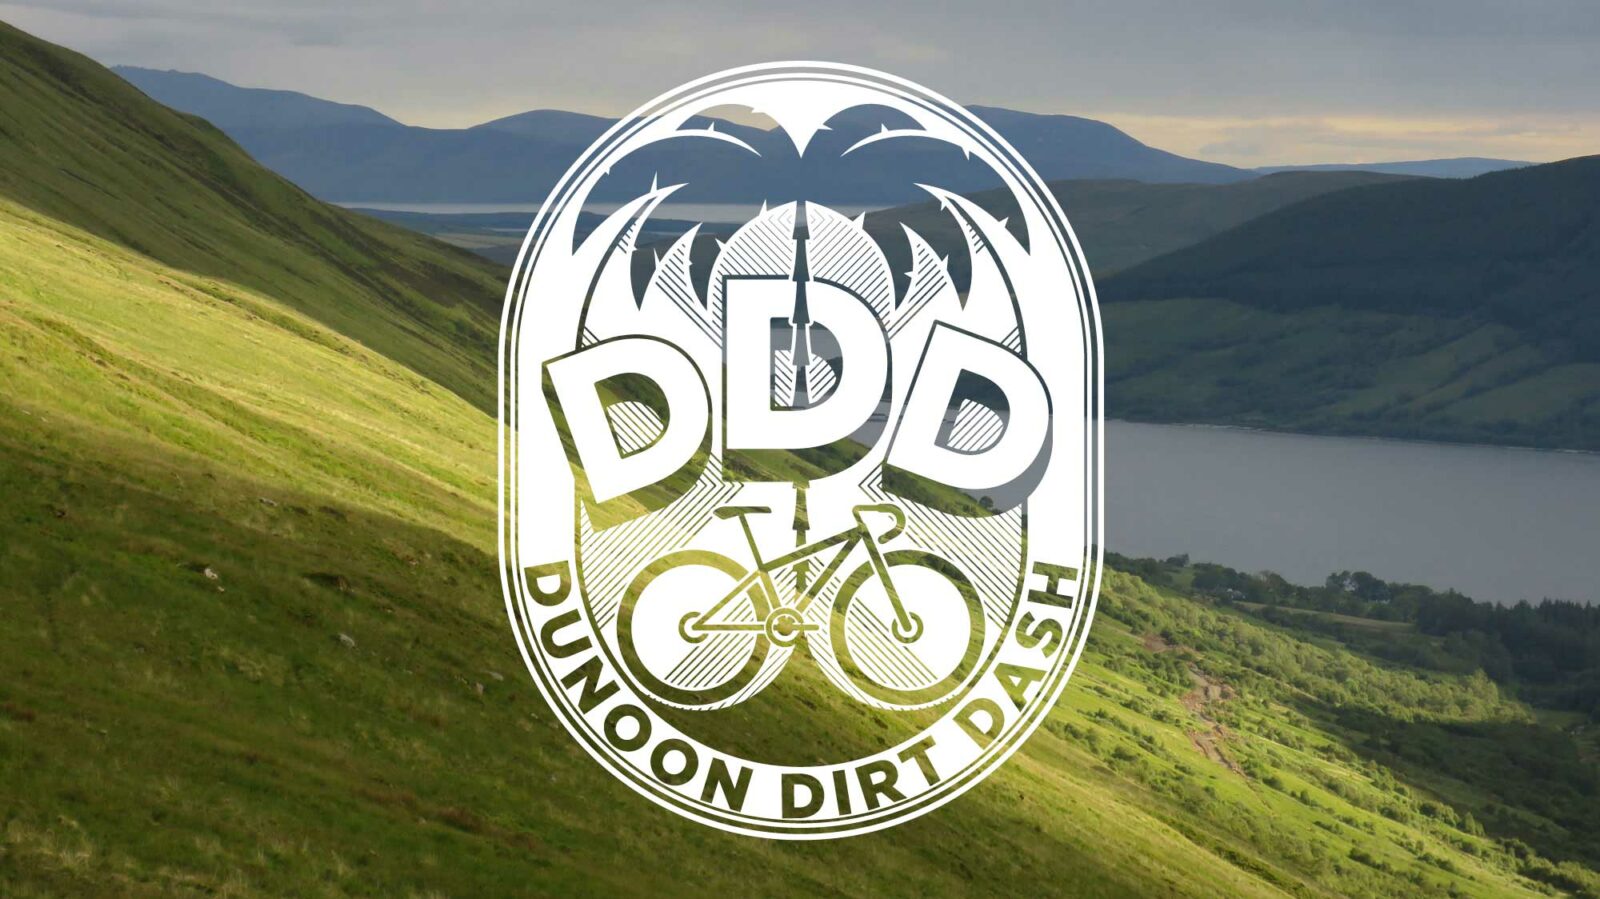 Dundoon Dirt Dash